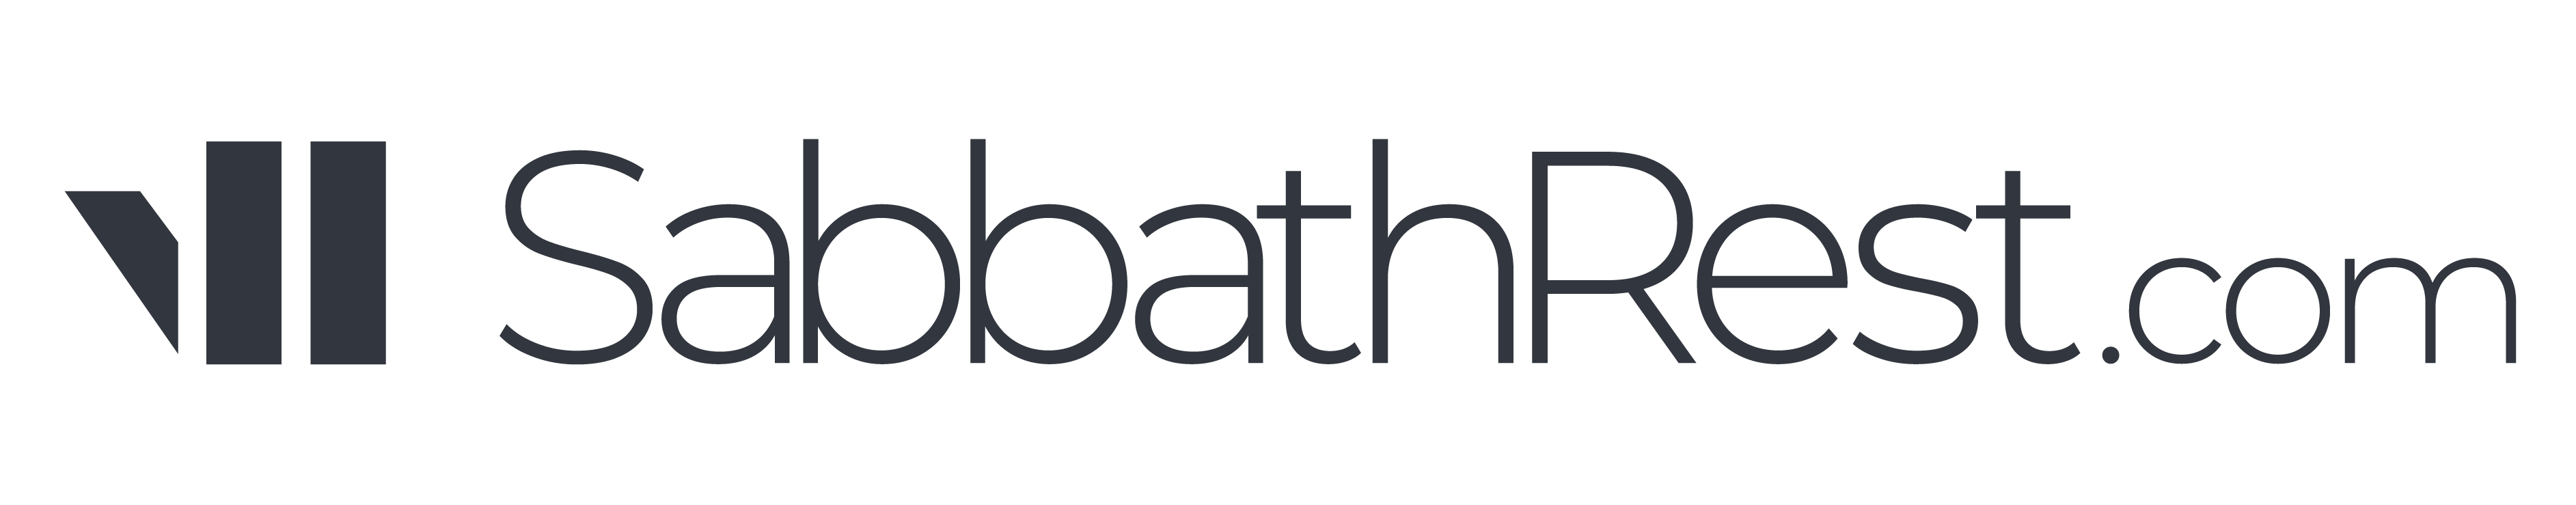 SabbathRest.com Logo